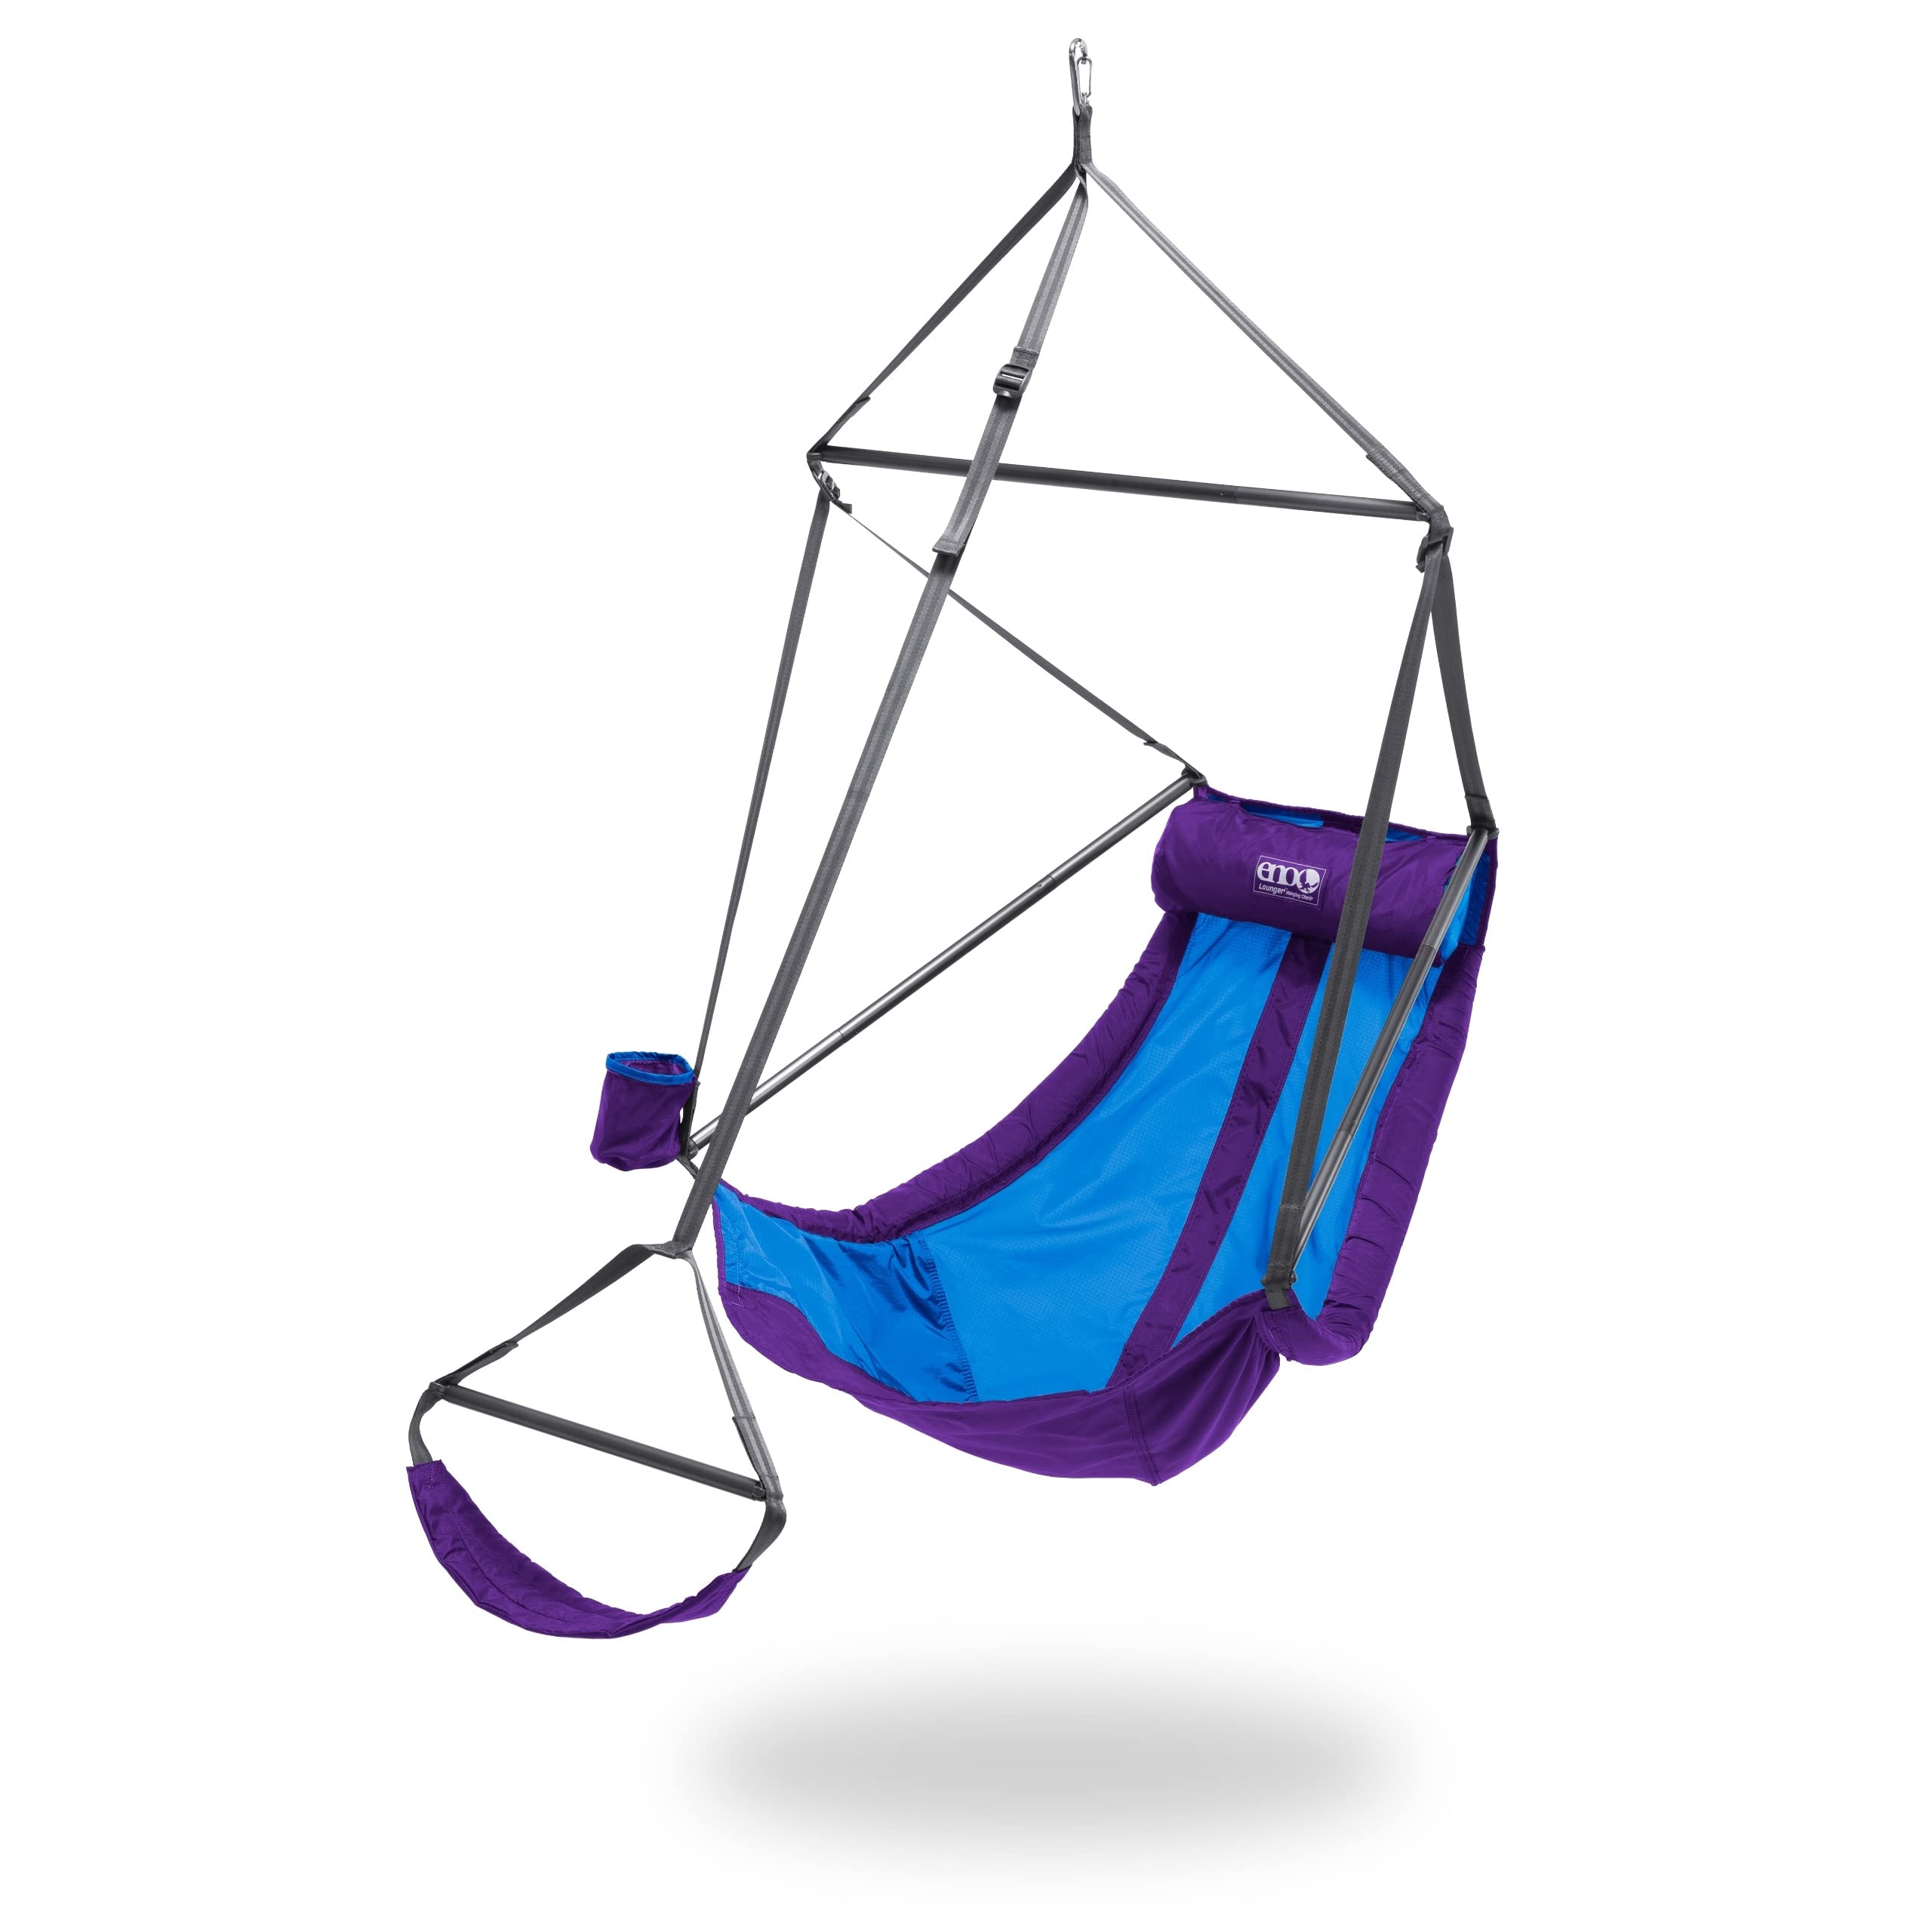 enoイノー Lounger Hanging Chair PurpleTeal LN208並行輸入品